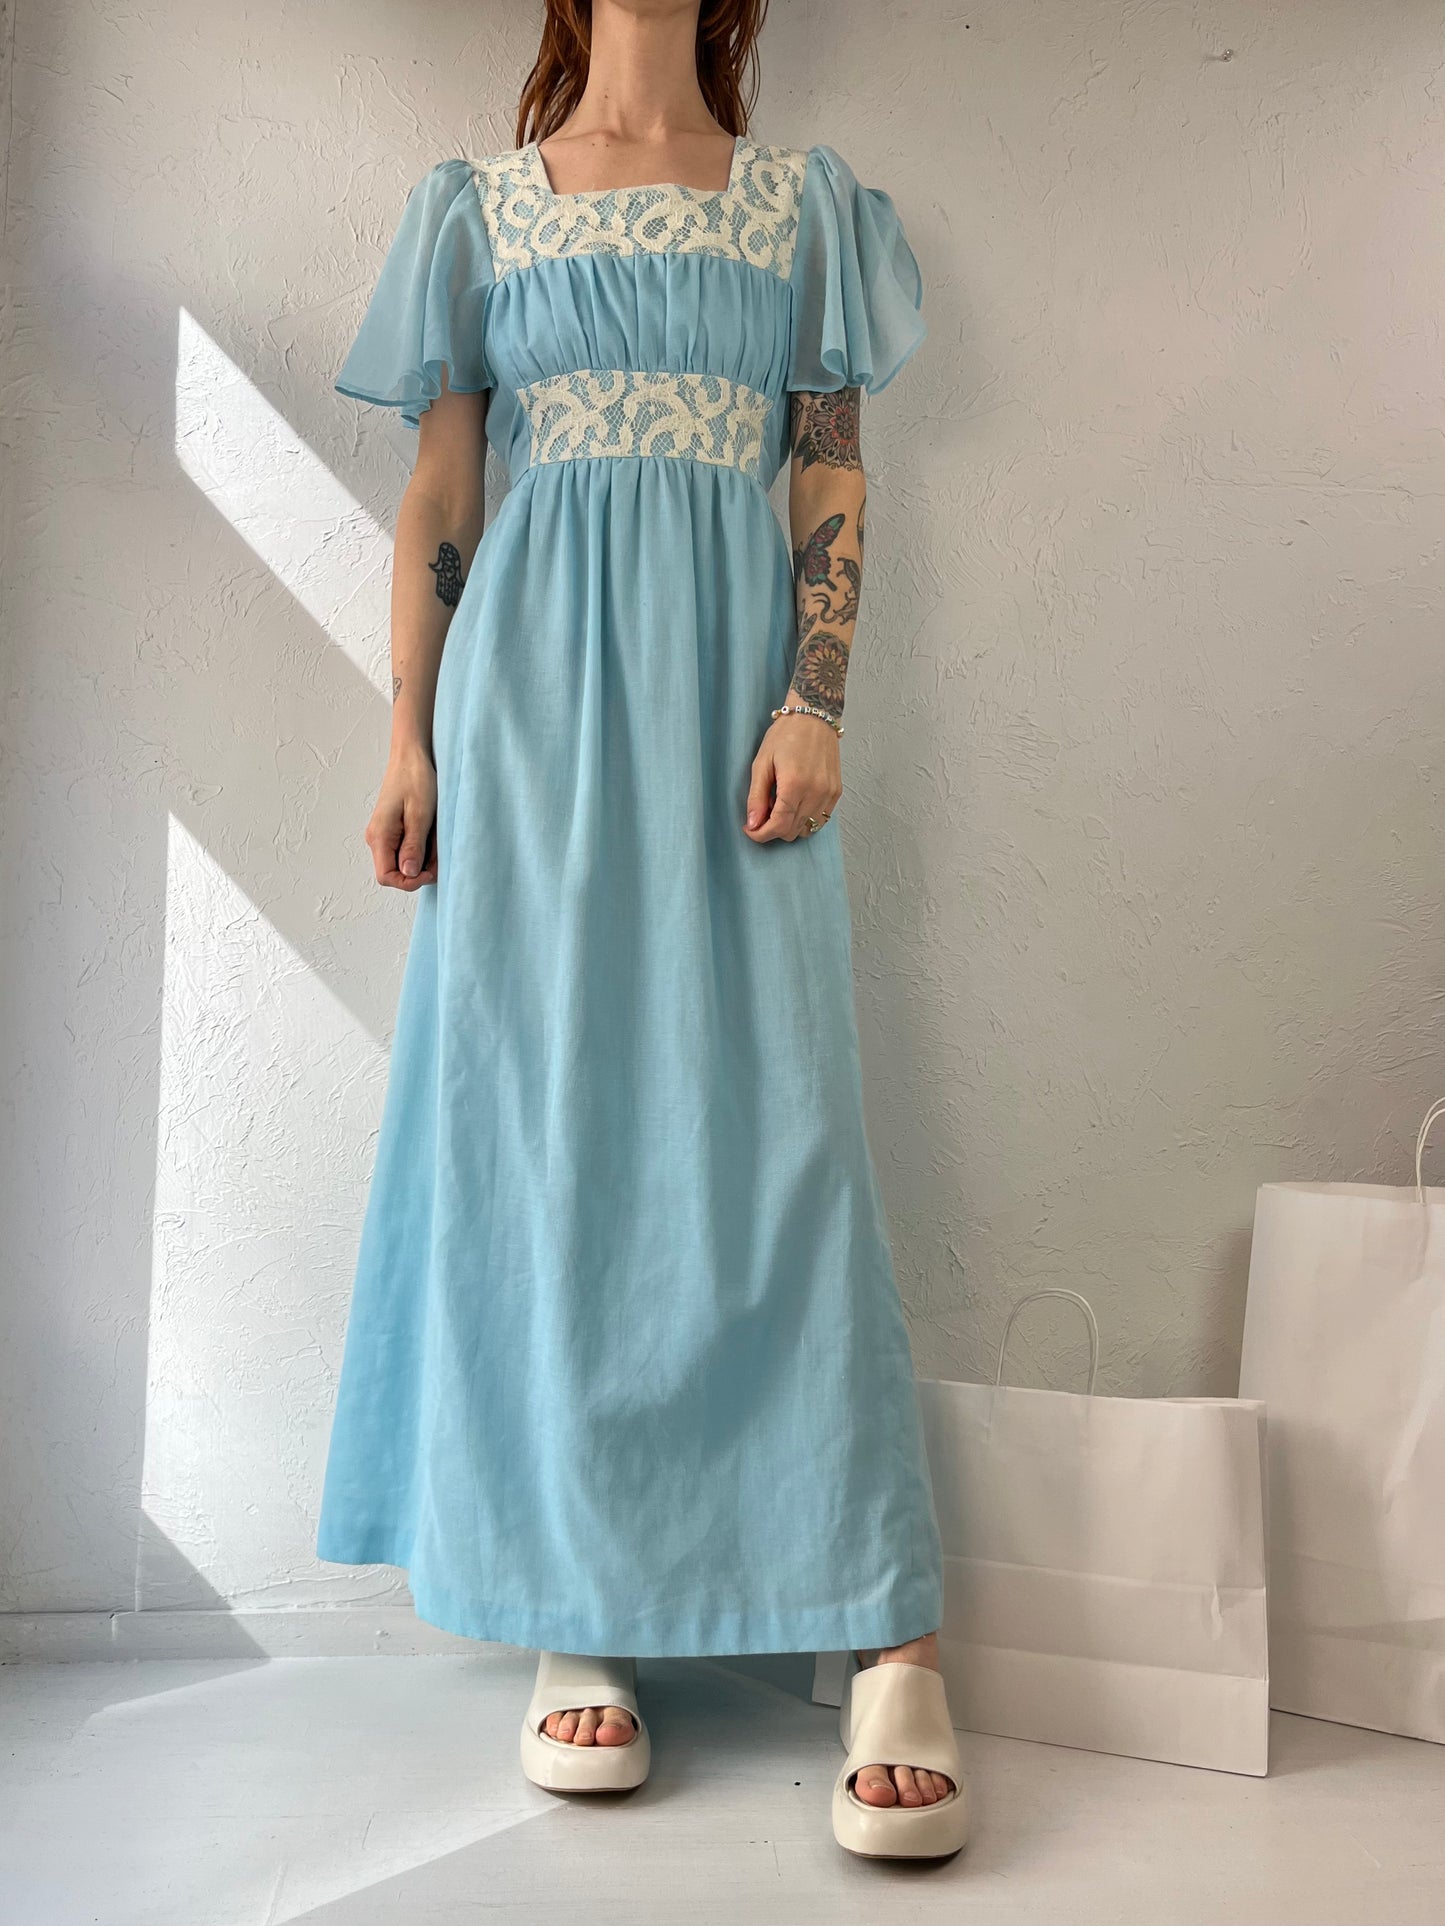 Handmade Baby Blue Prairie Core Maxi Dress